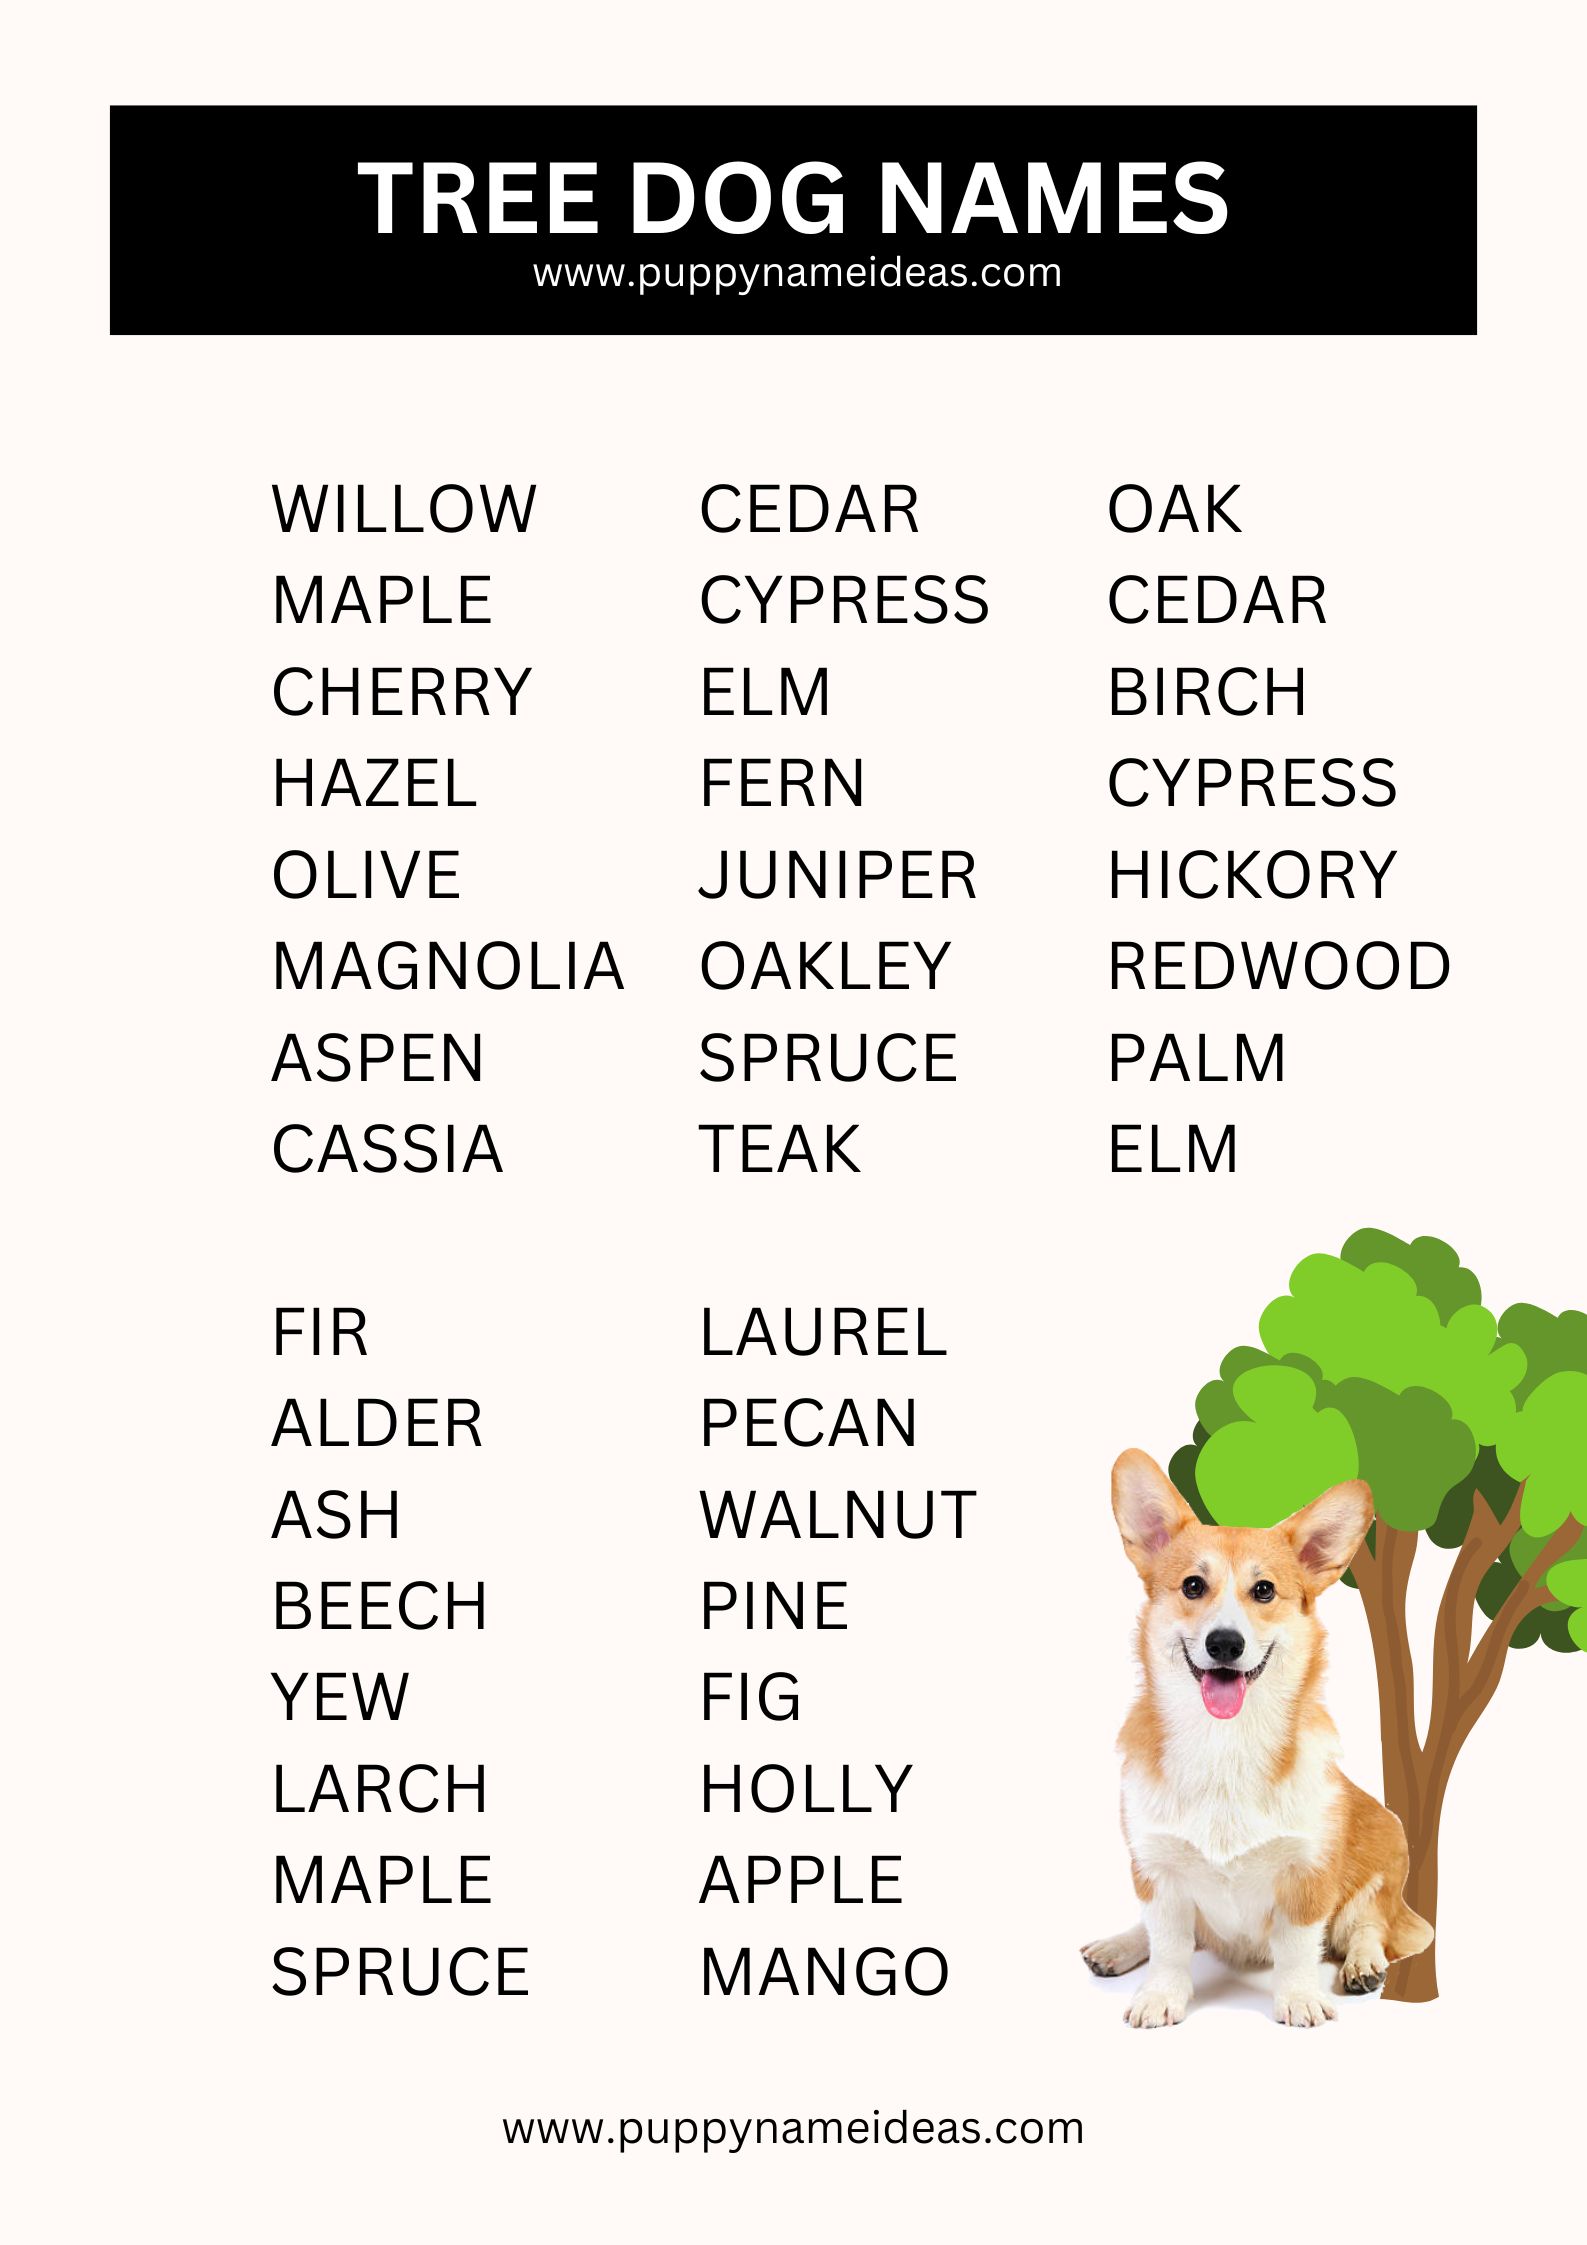 list of tree dog names